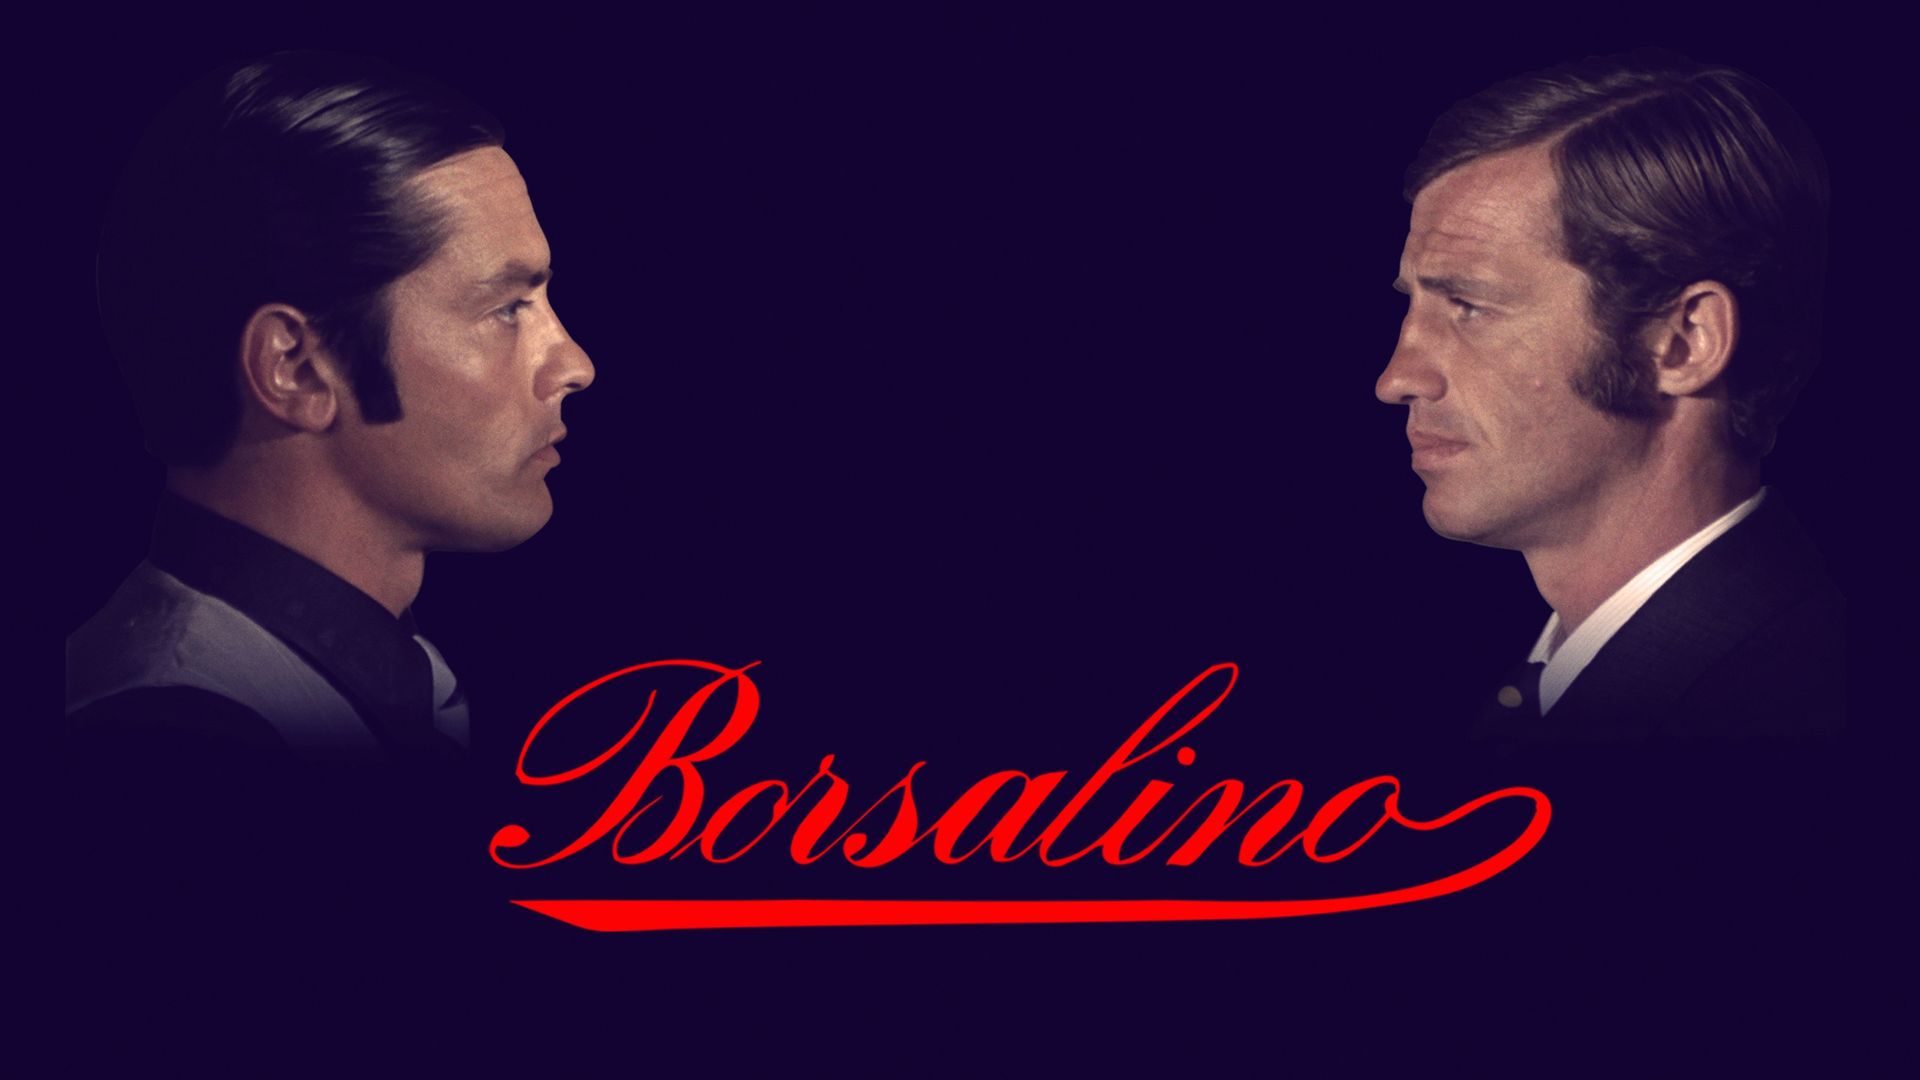 Borsalino Backdrop